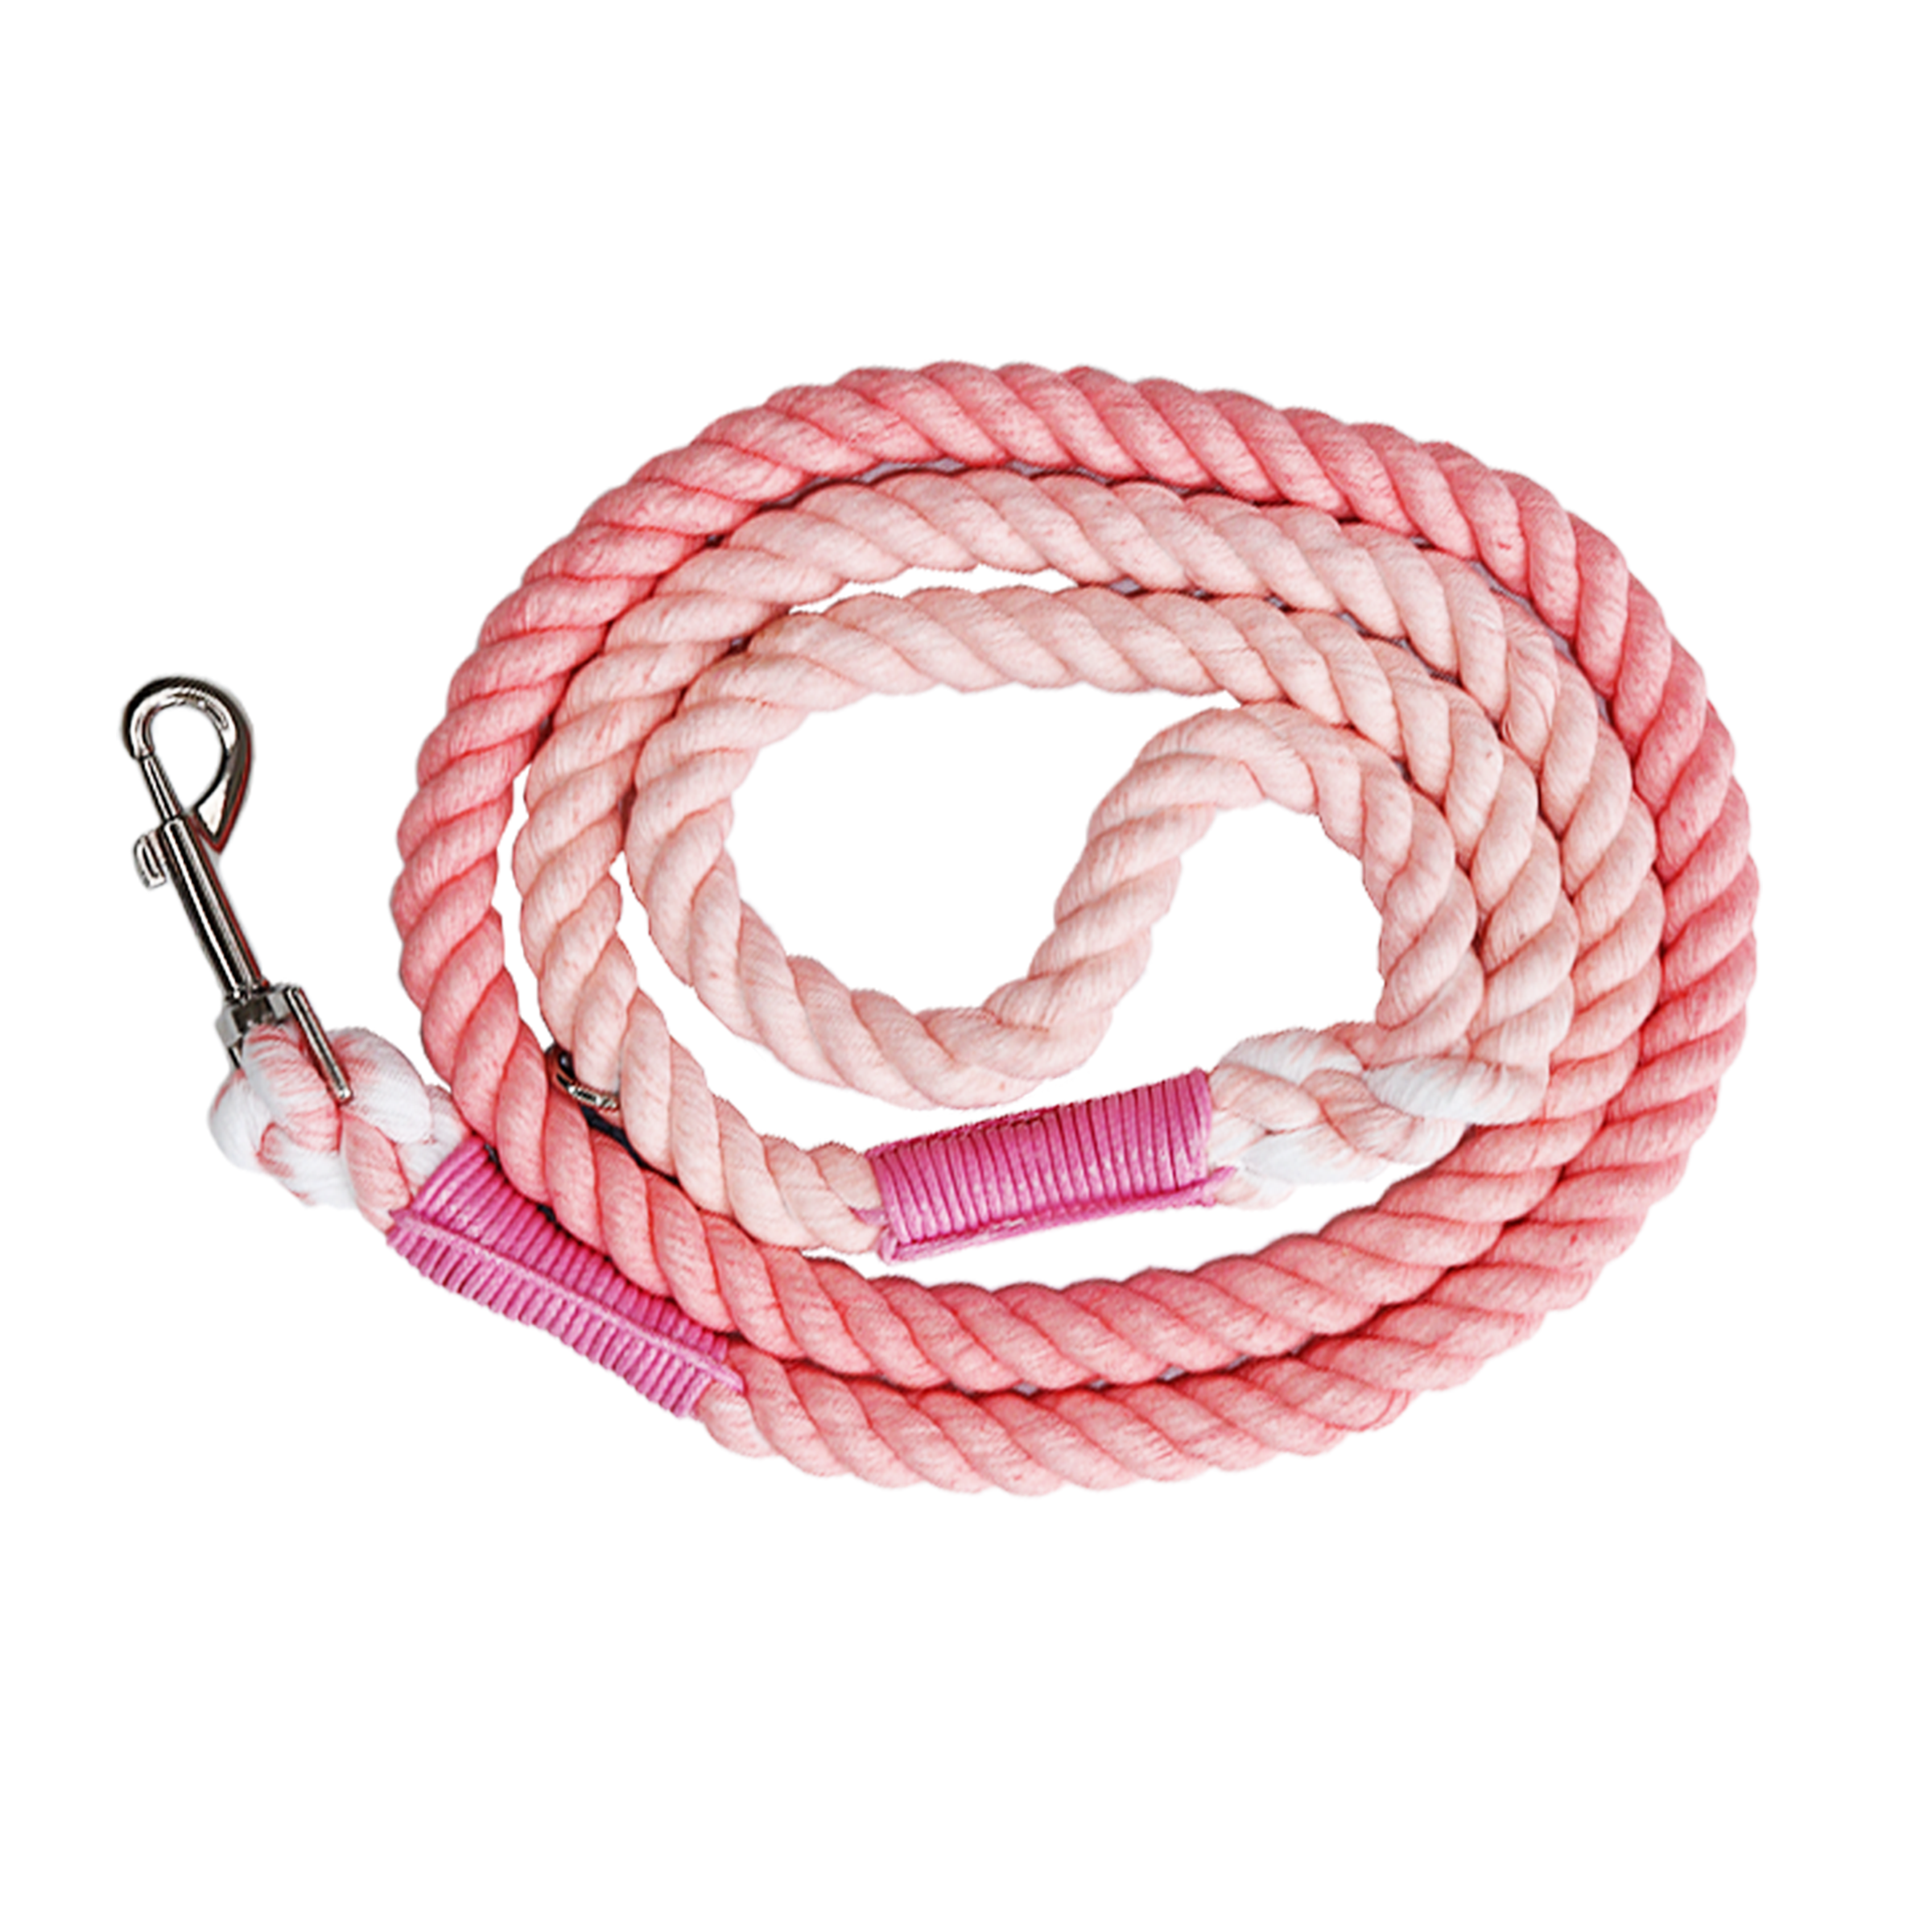 Peach Pink Dog Rope Lead